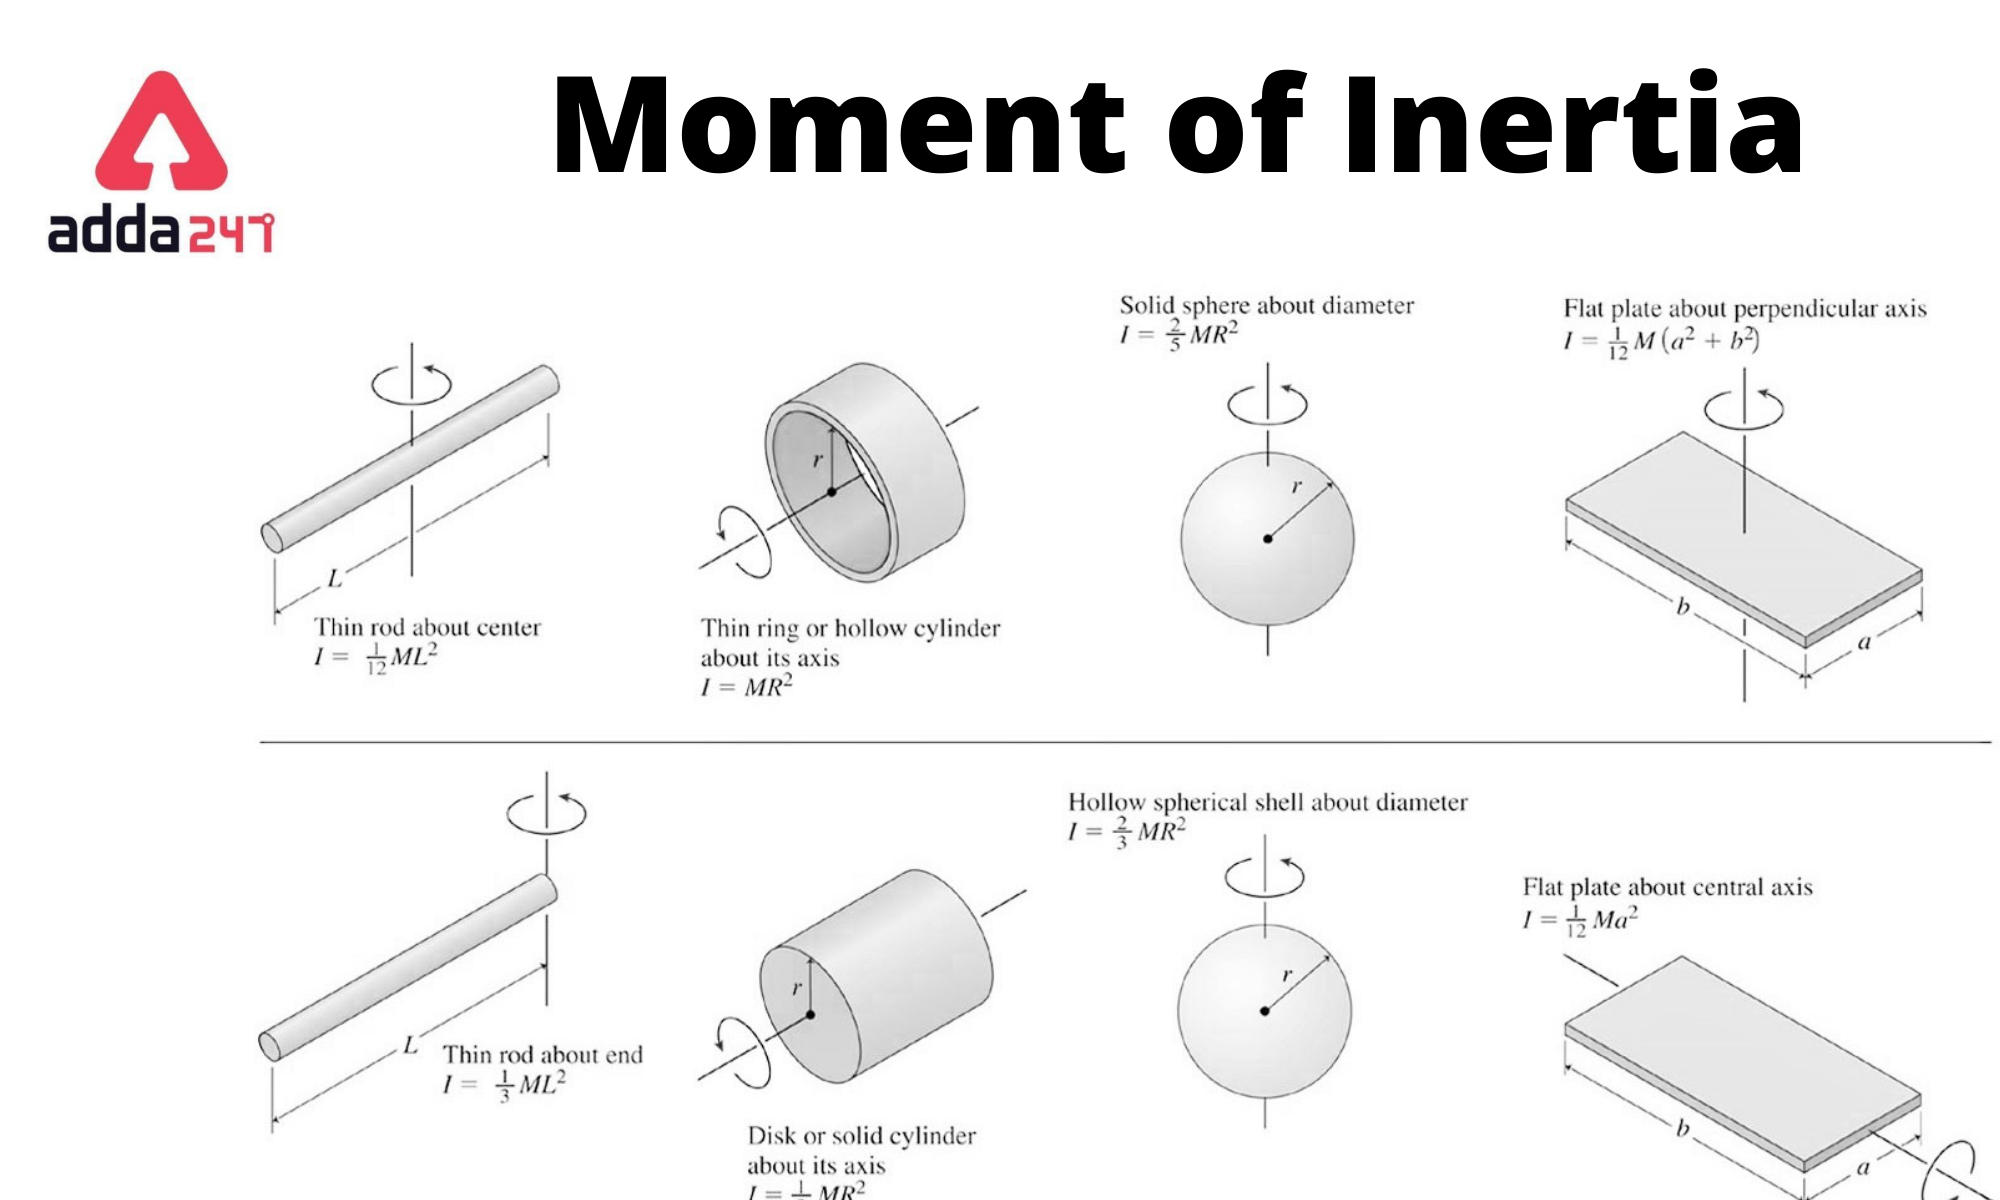 2nd moment of inertia equation j